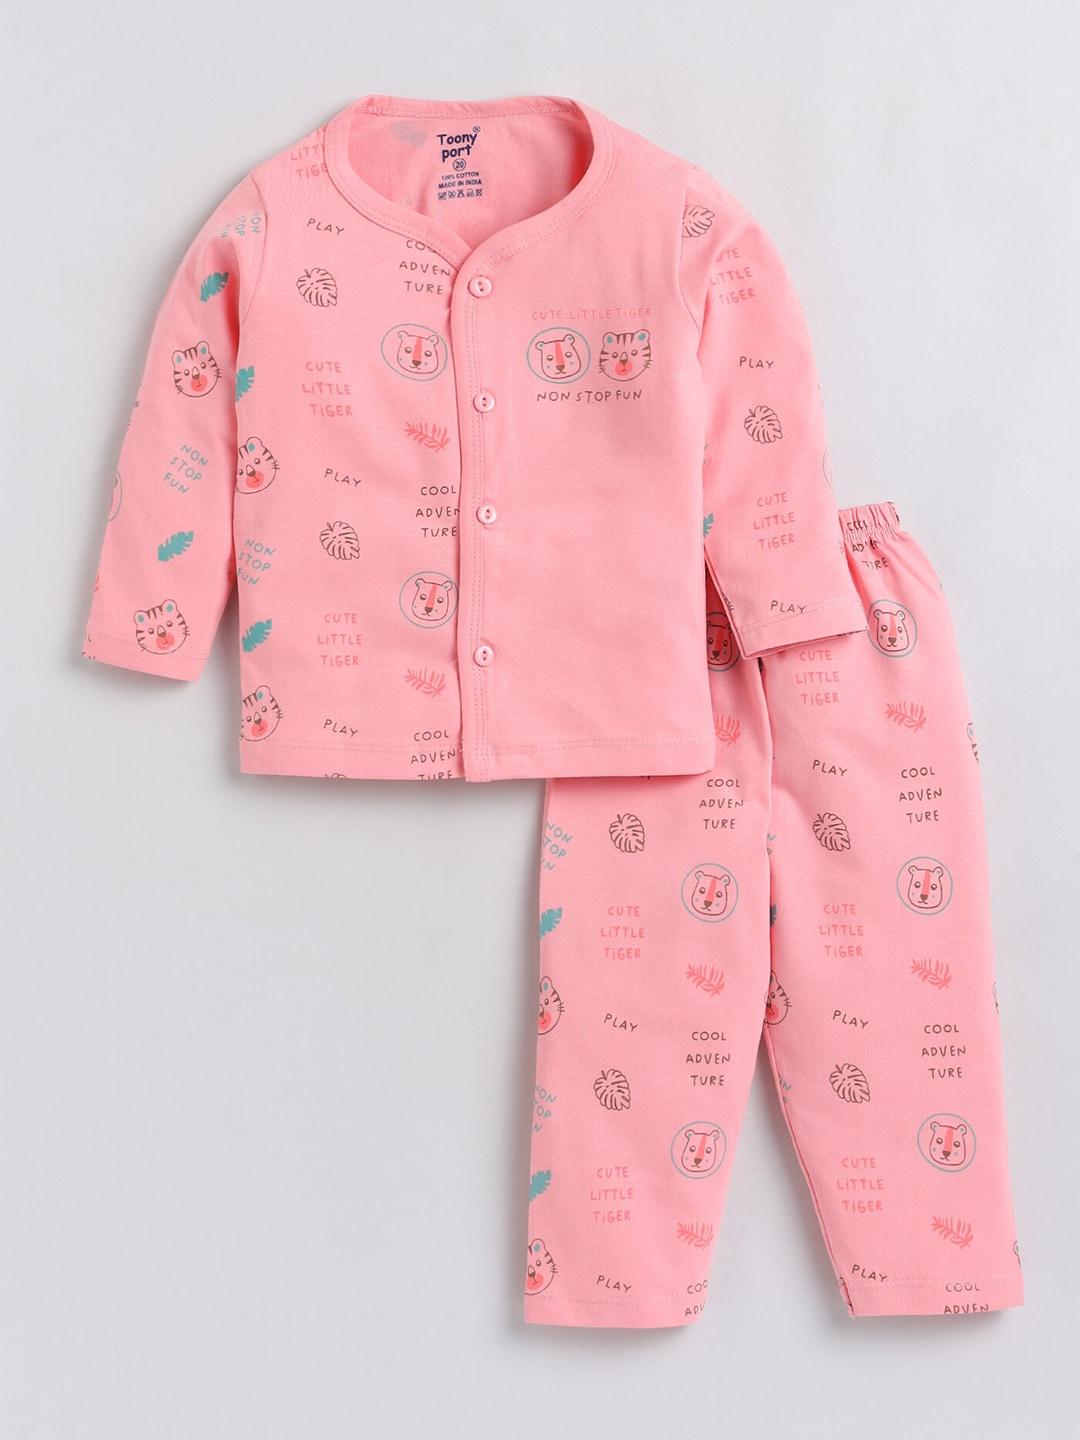 toonyport kids pink & black printed pure cotton top with pyjamas